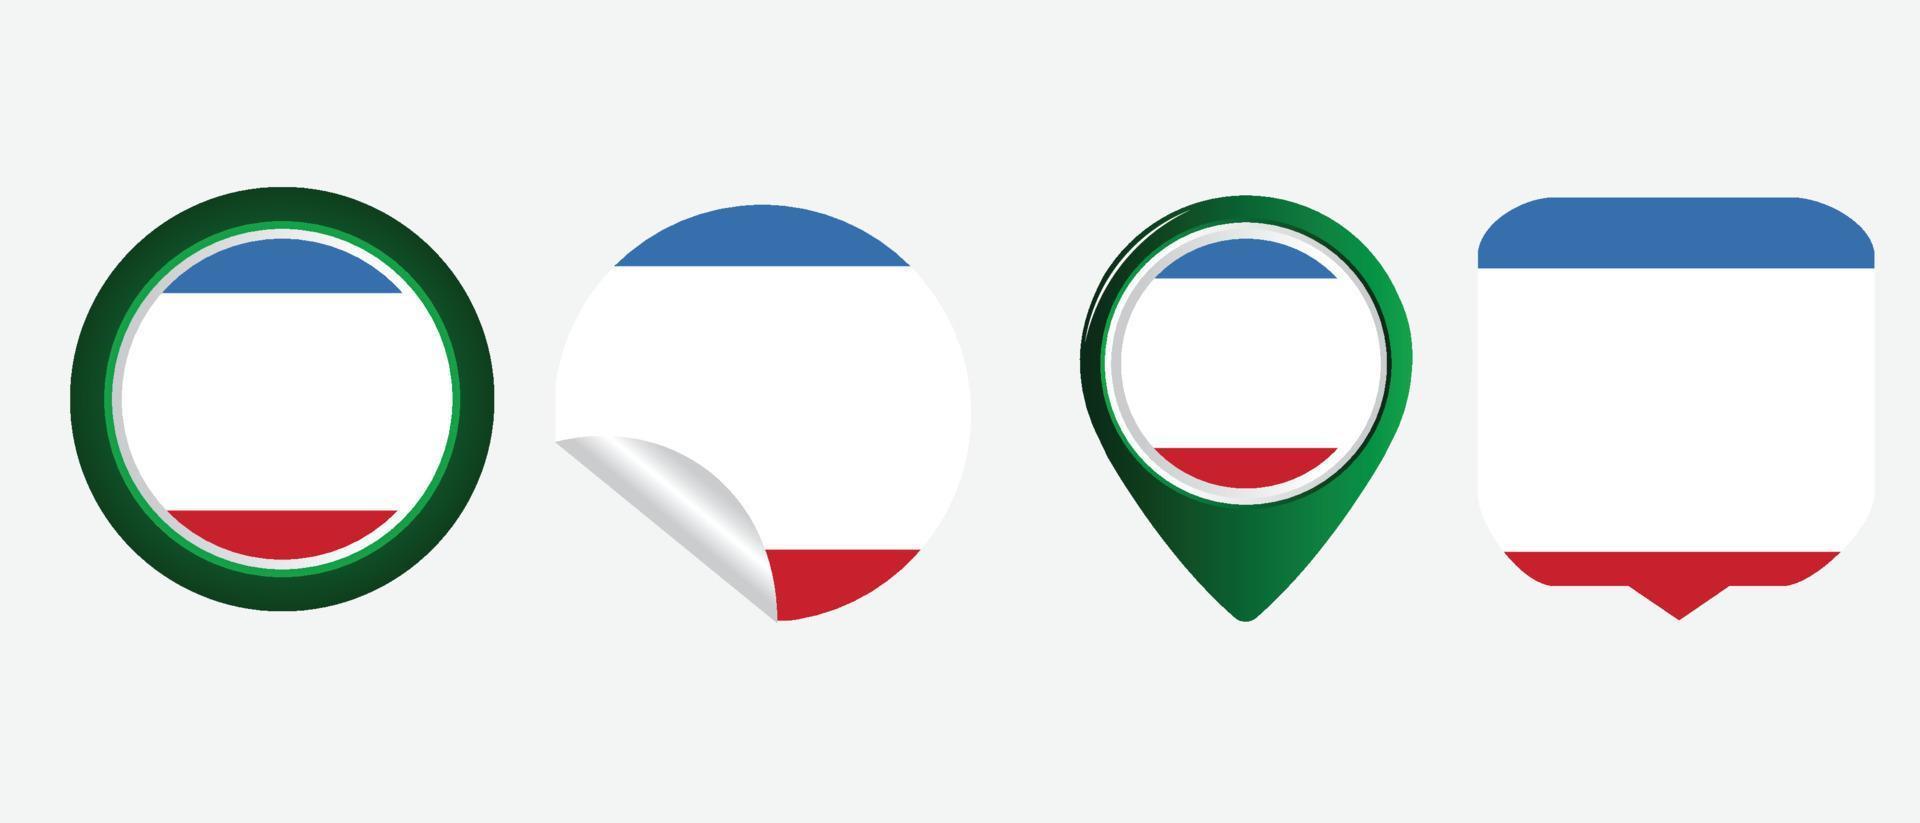 Krim vlag. platte pictogram symbool vectorillustratie vector